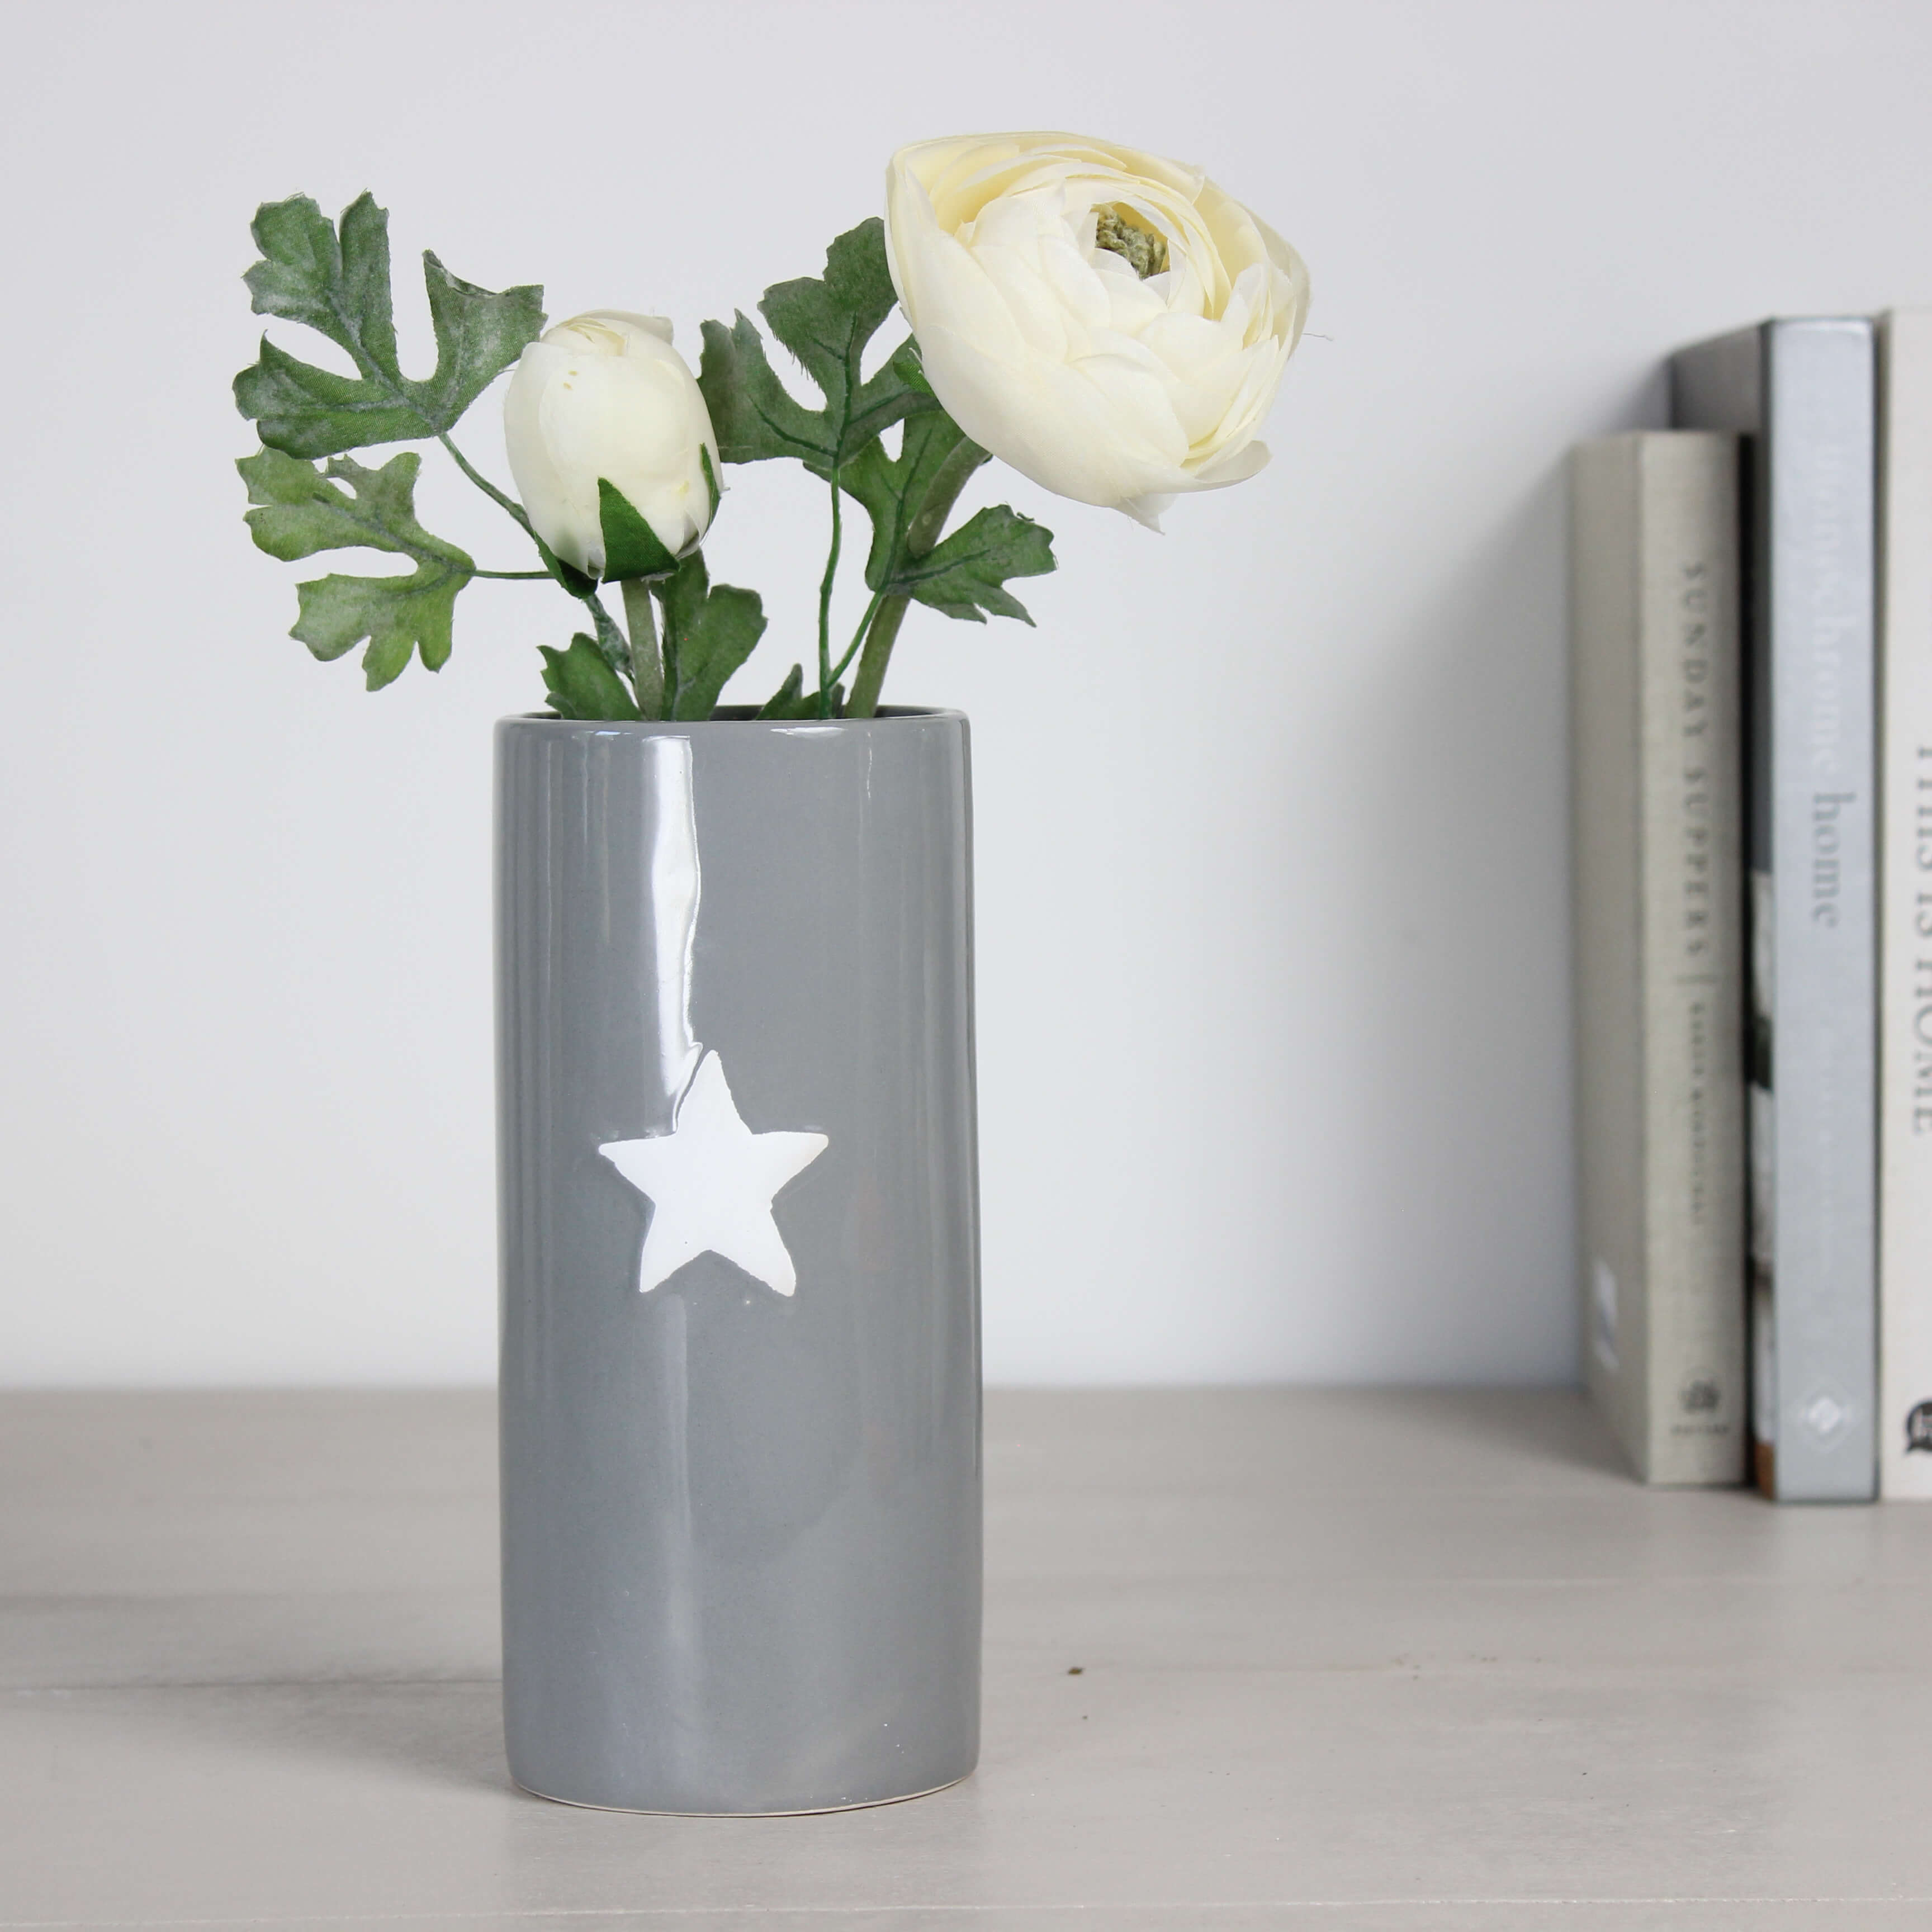 Small Grey Ceramic Vase with White Star